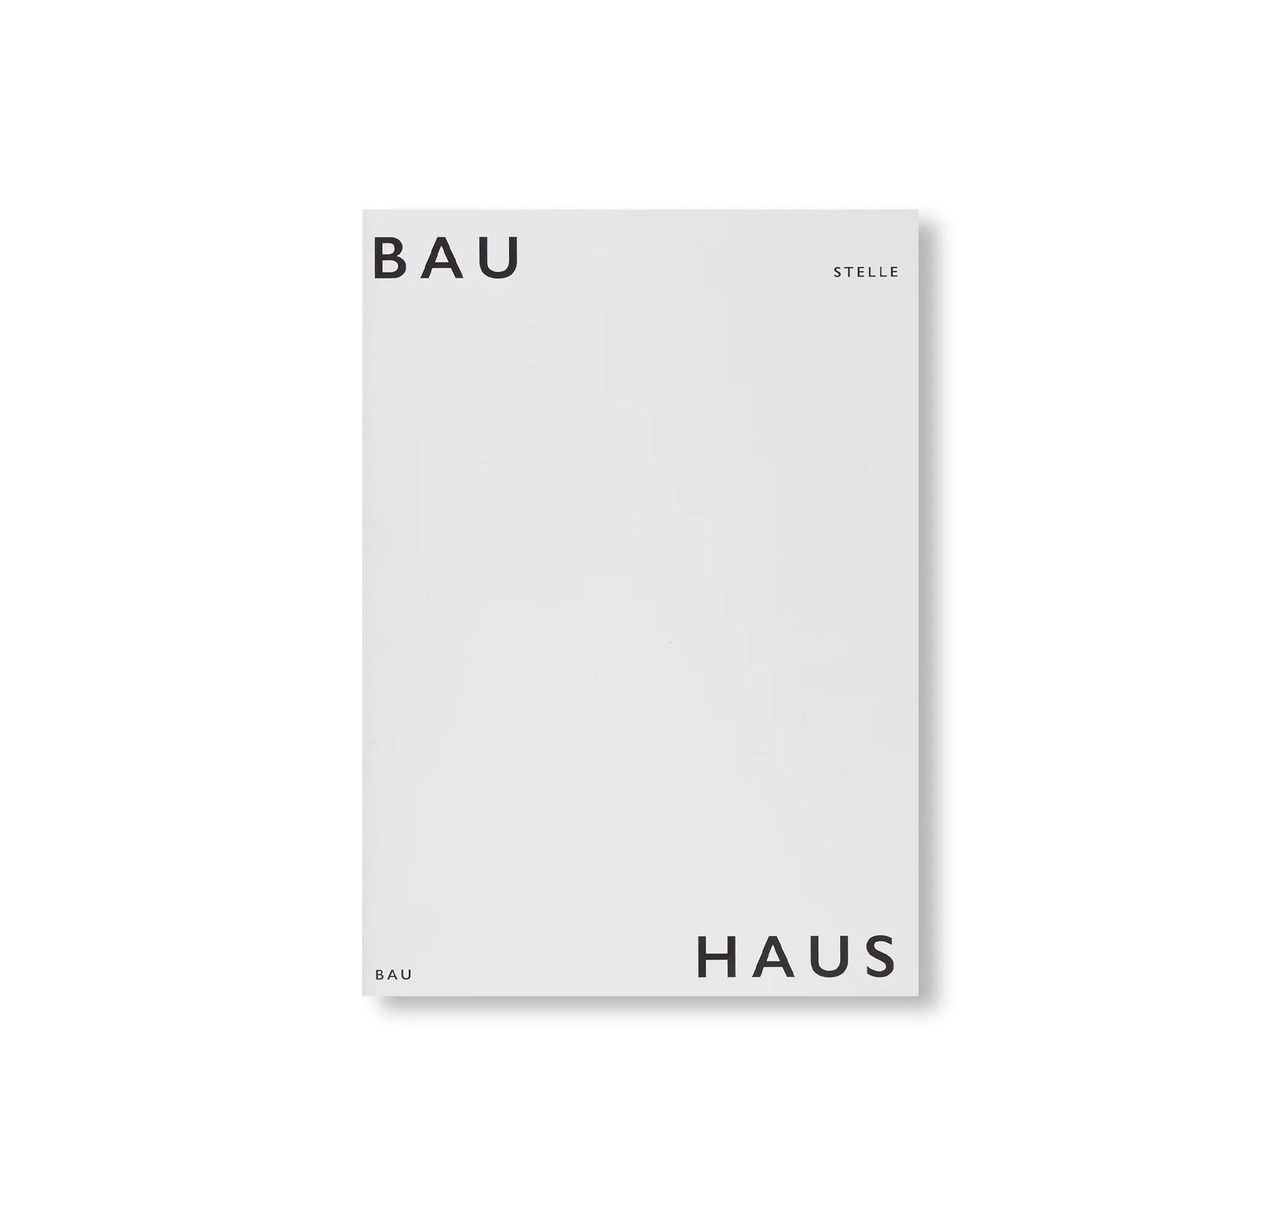 BAUSTELLE BAUHAUS by Heike Hanada